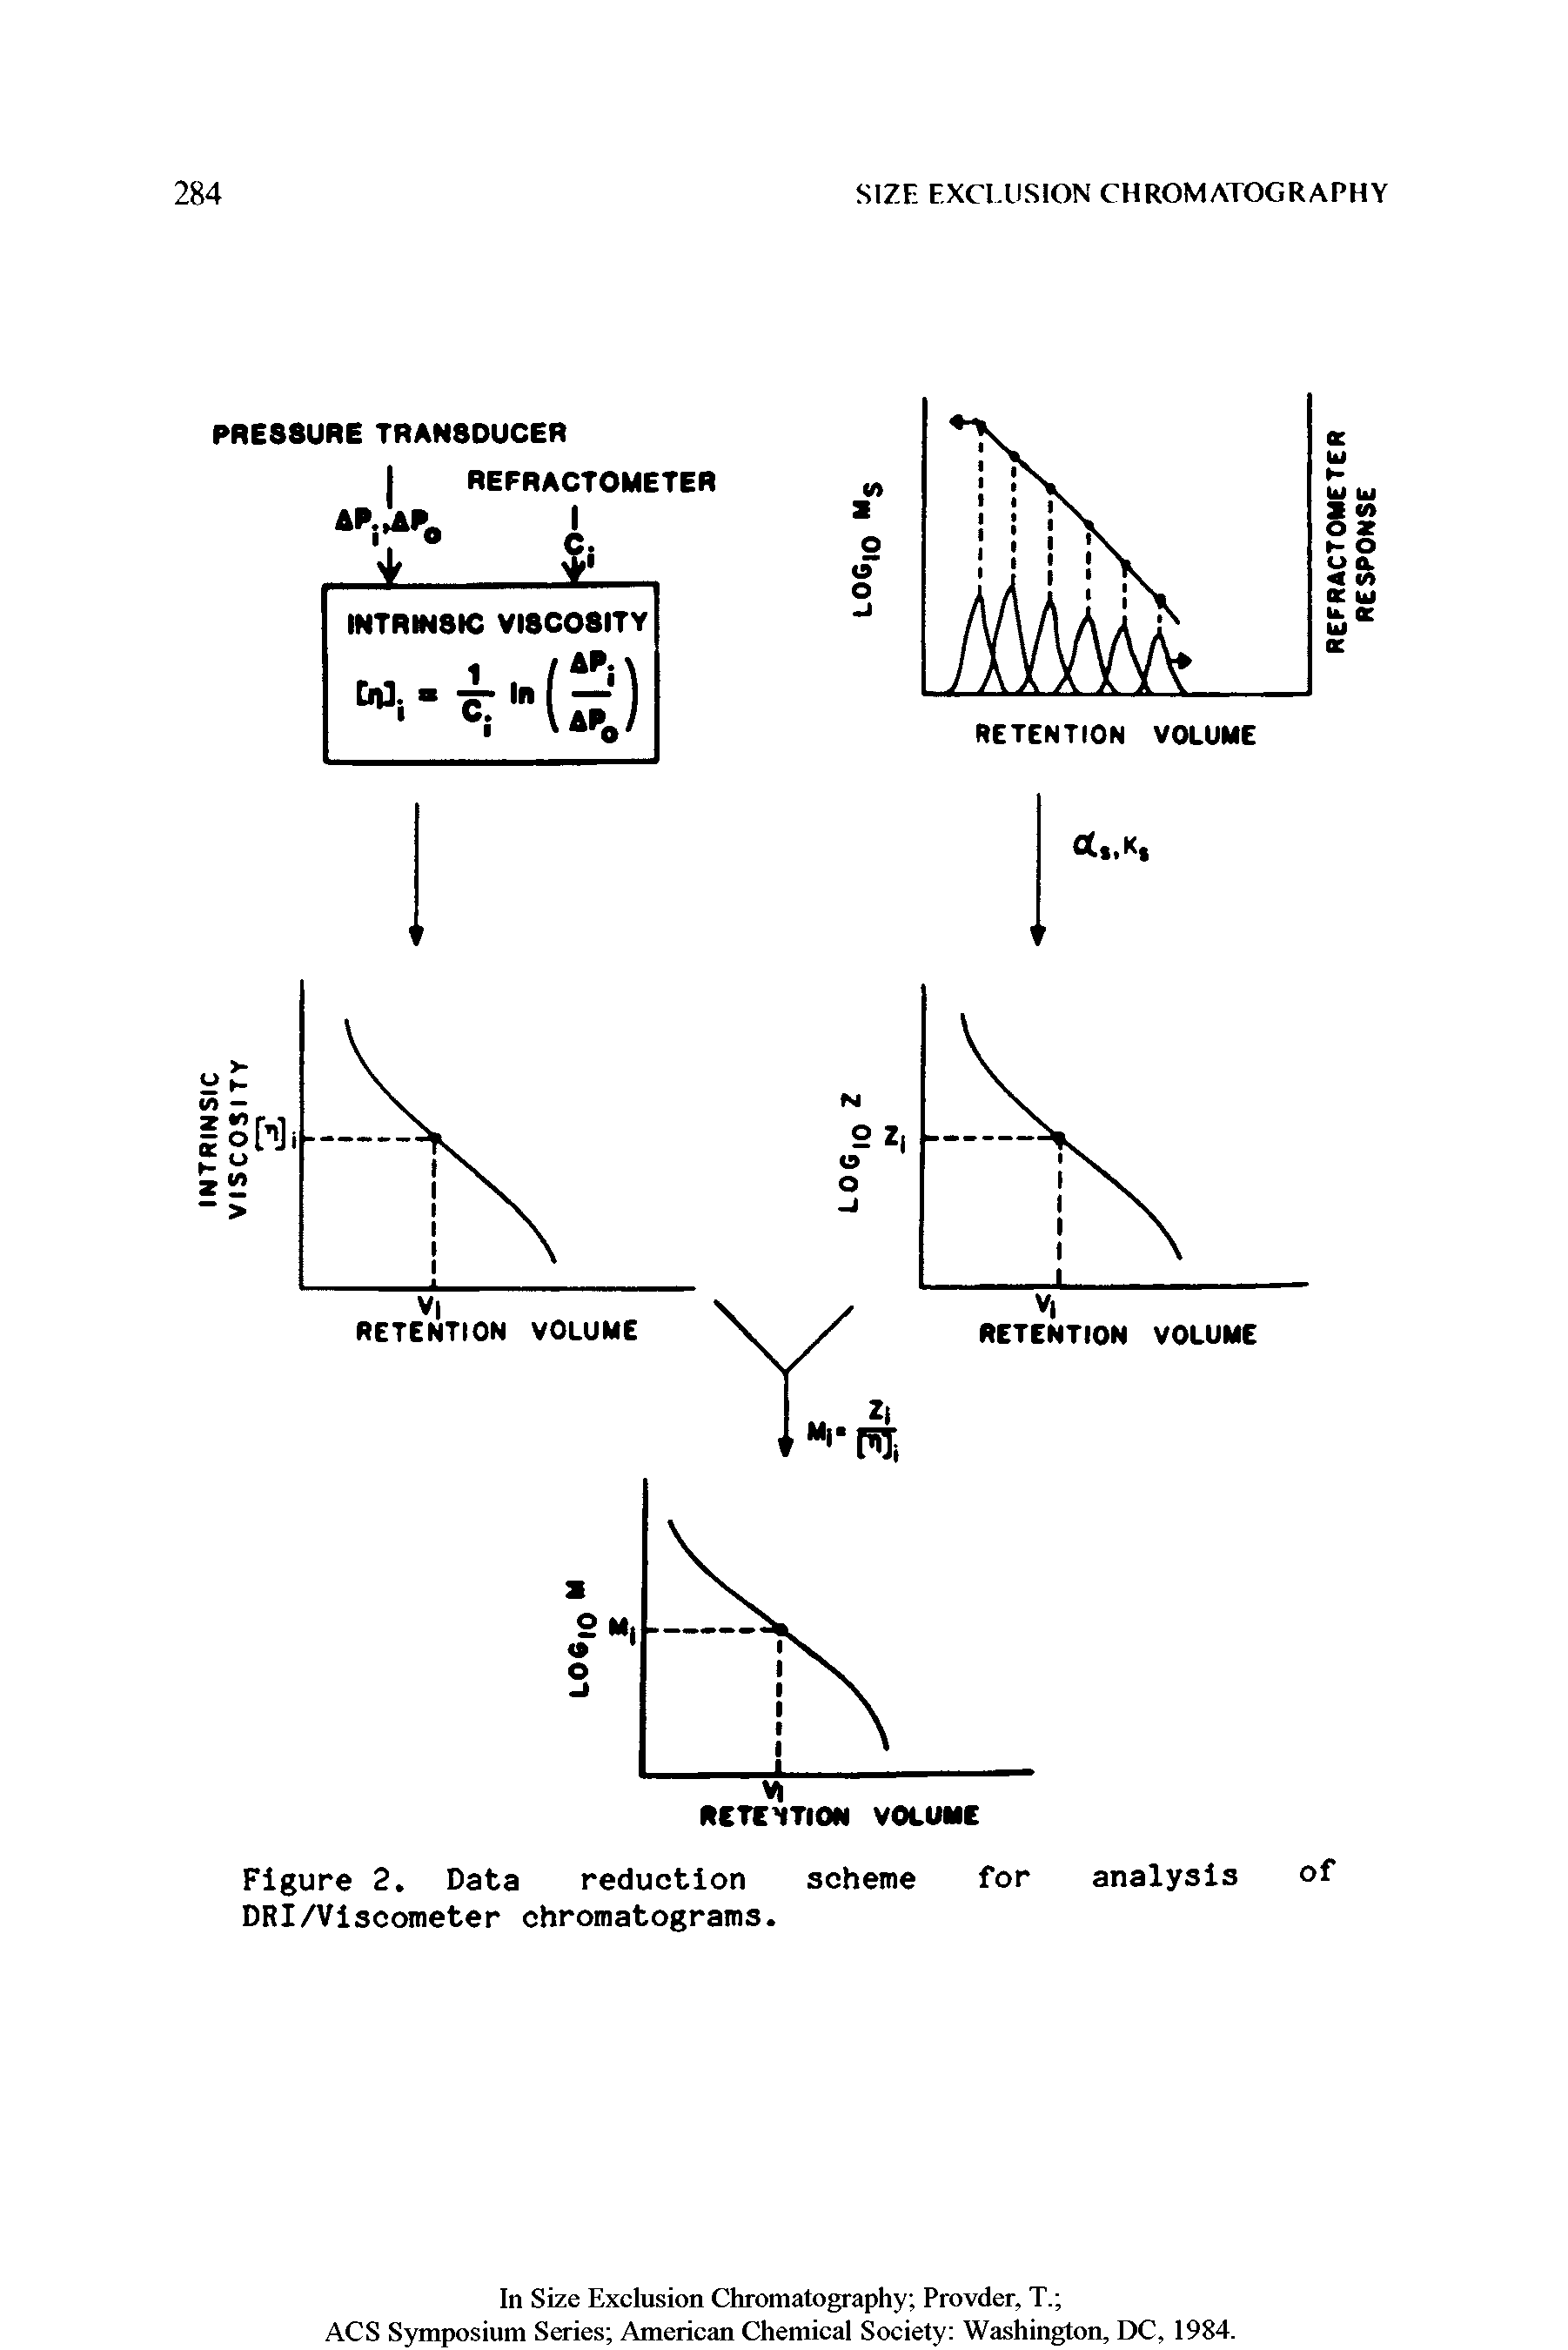 Figure 2. Data reduction scheme for analysis of DRI/Viscometer chromatograms.